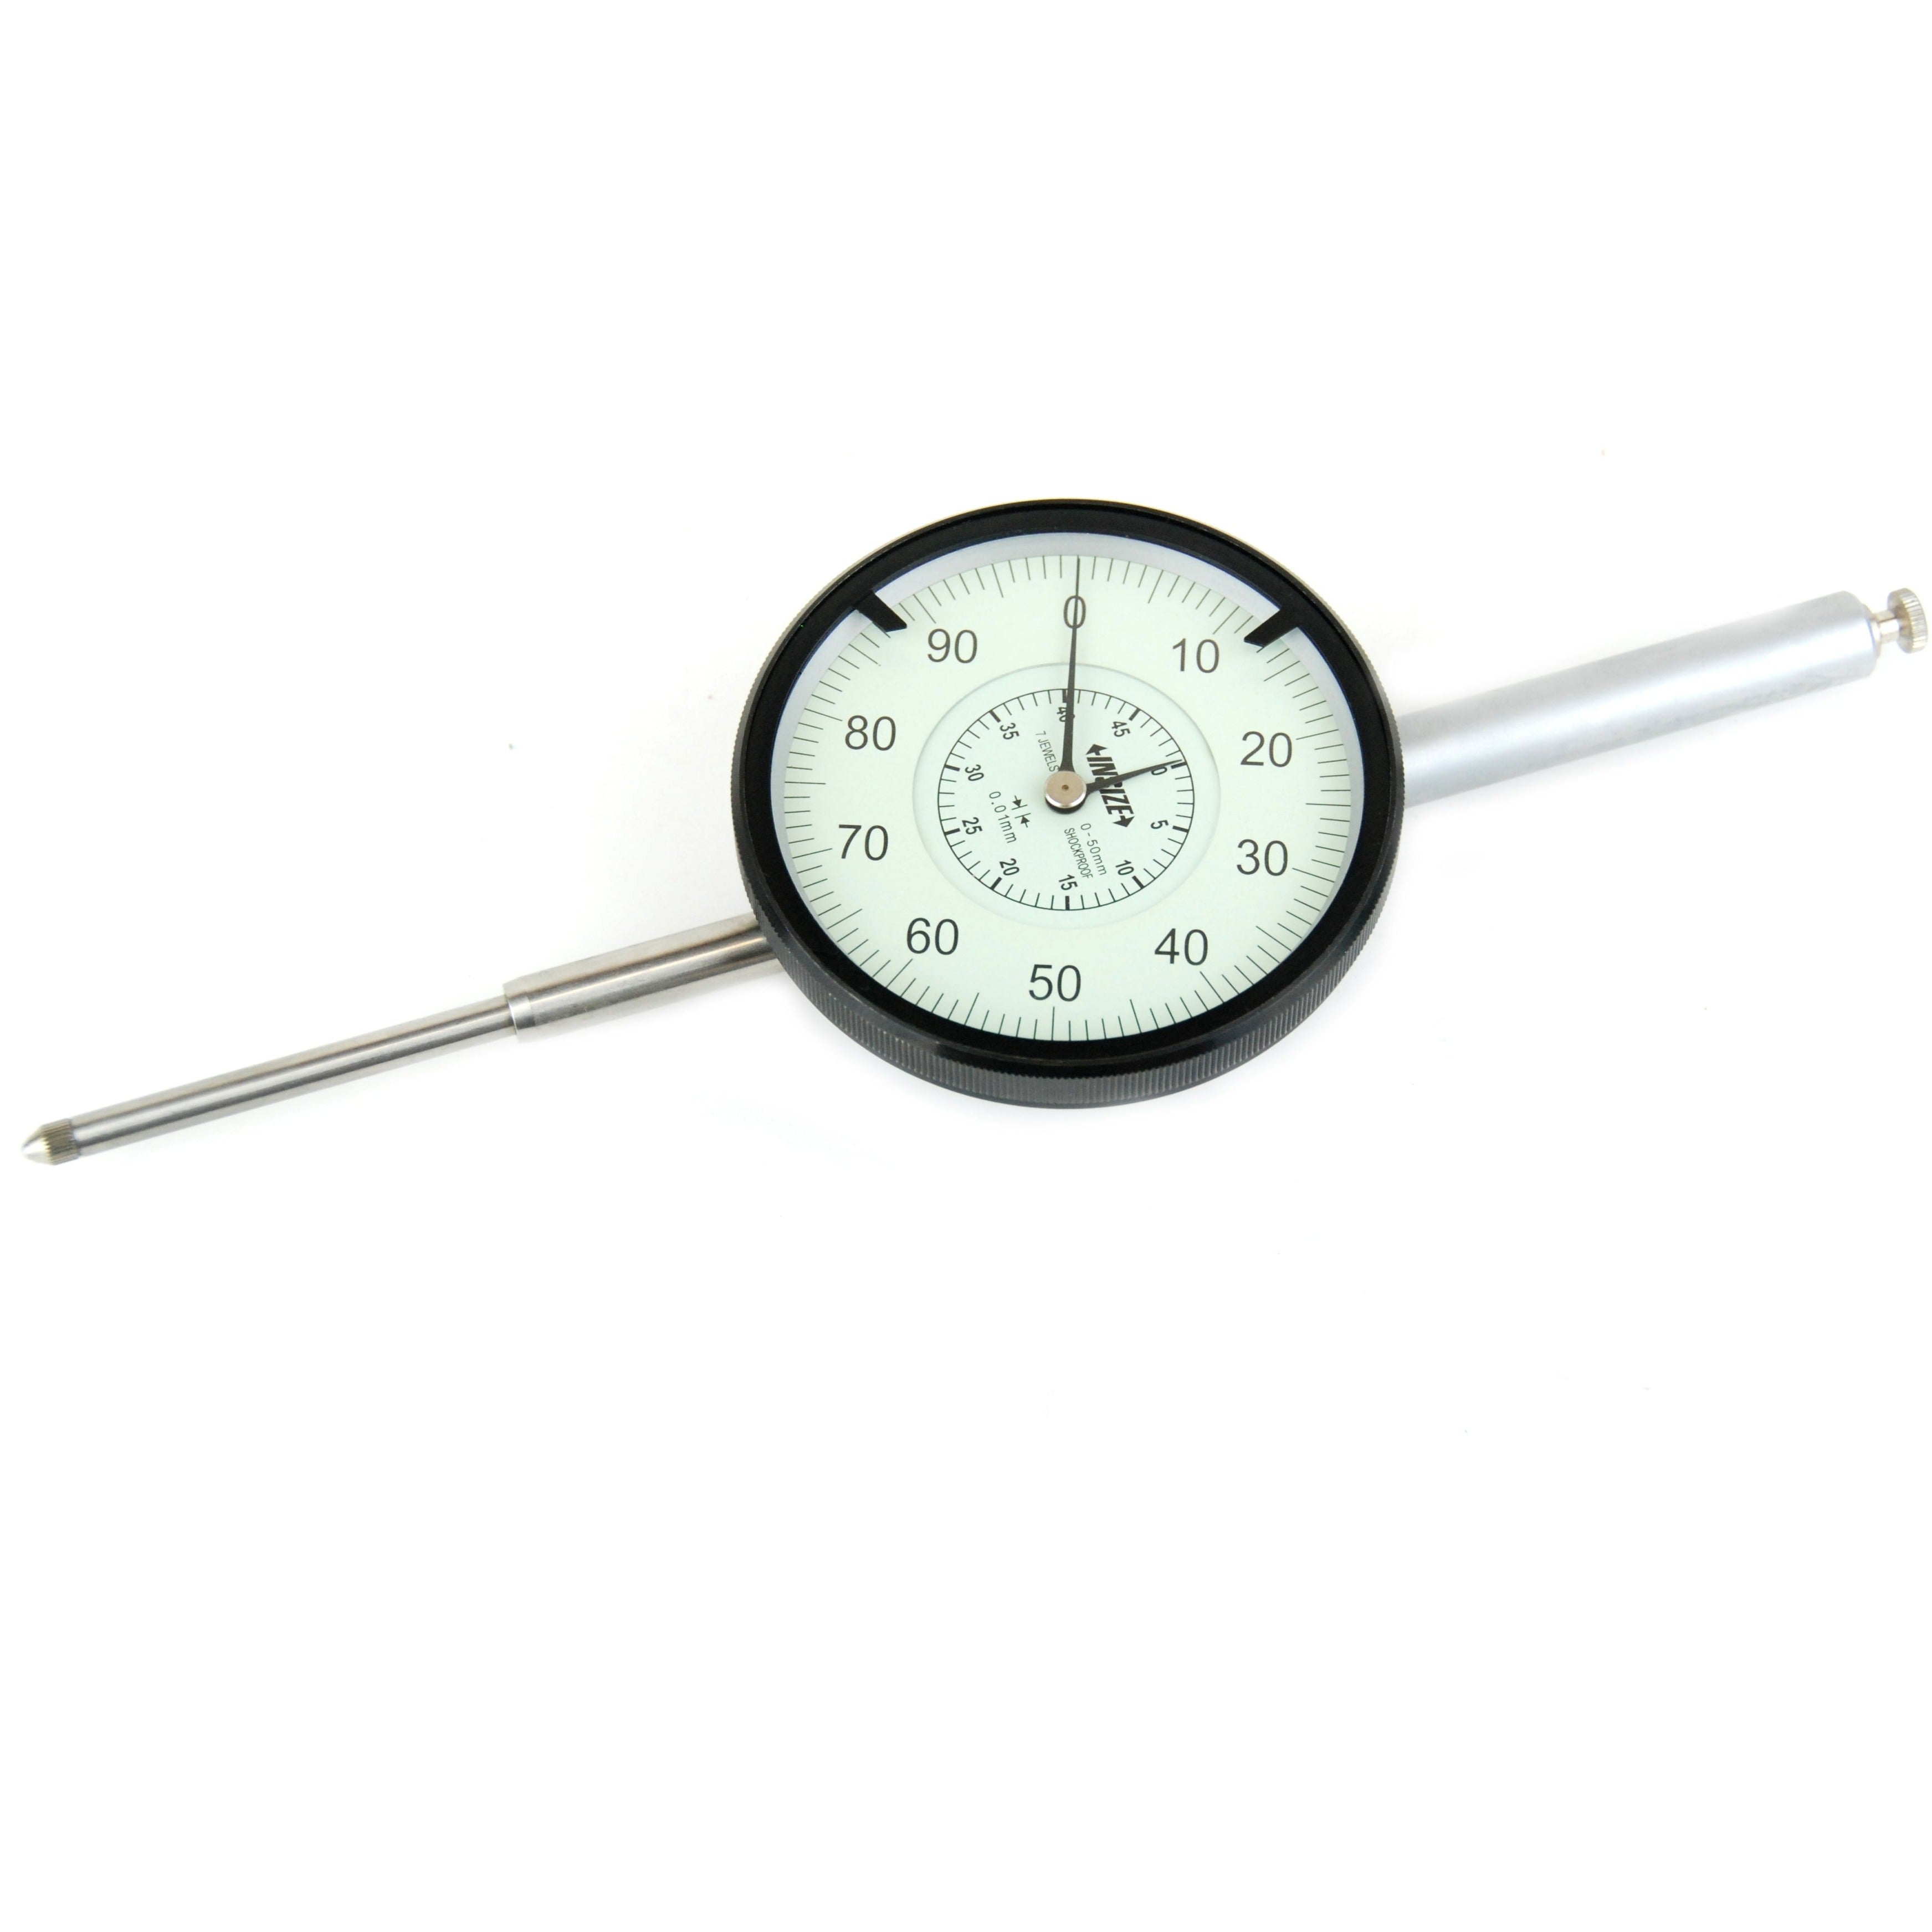 Insize Metric Long Stroke Dial Indicator 50mm Range Series 2309-50